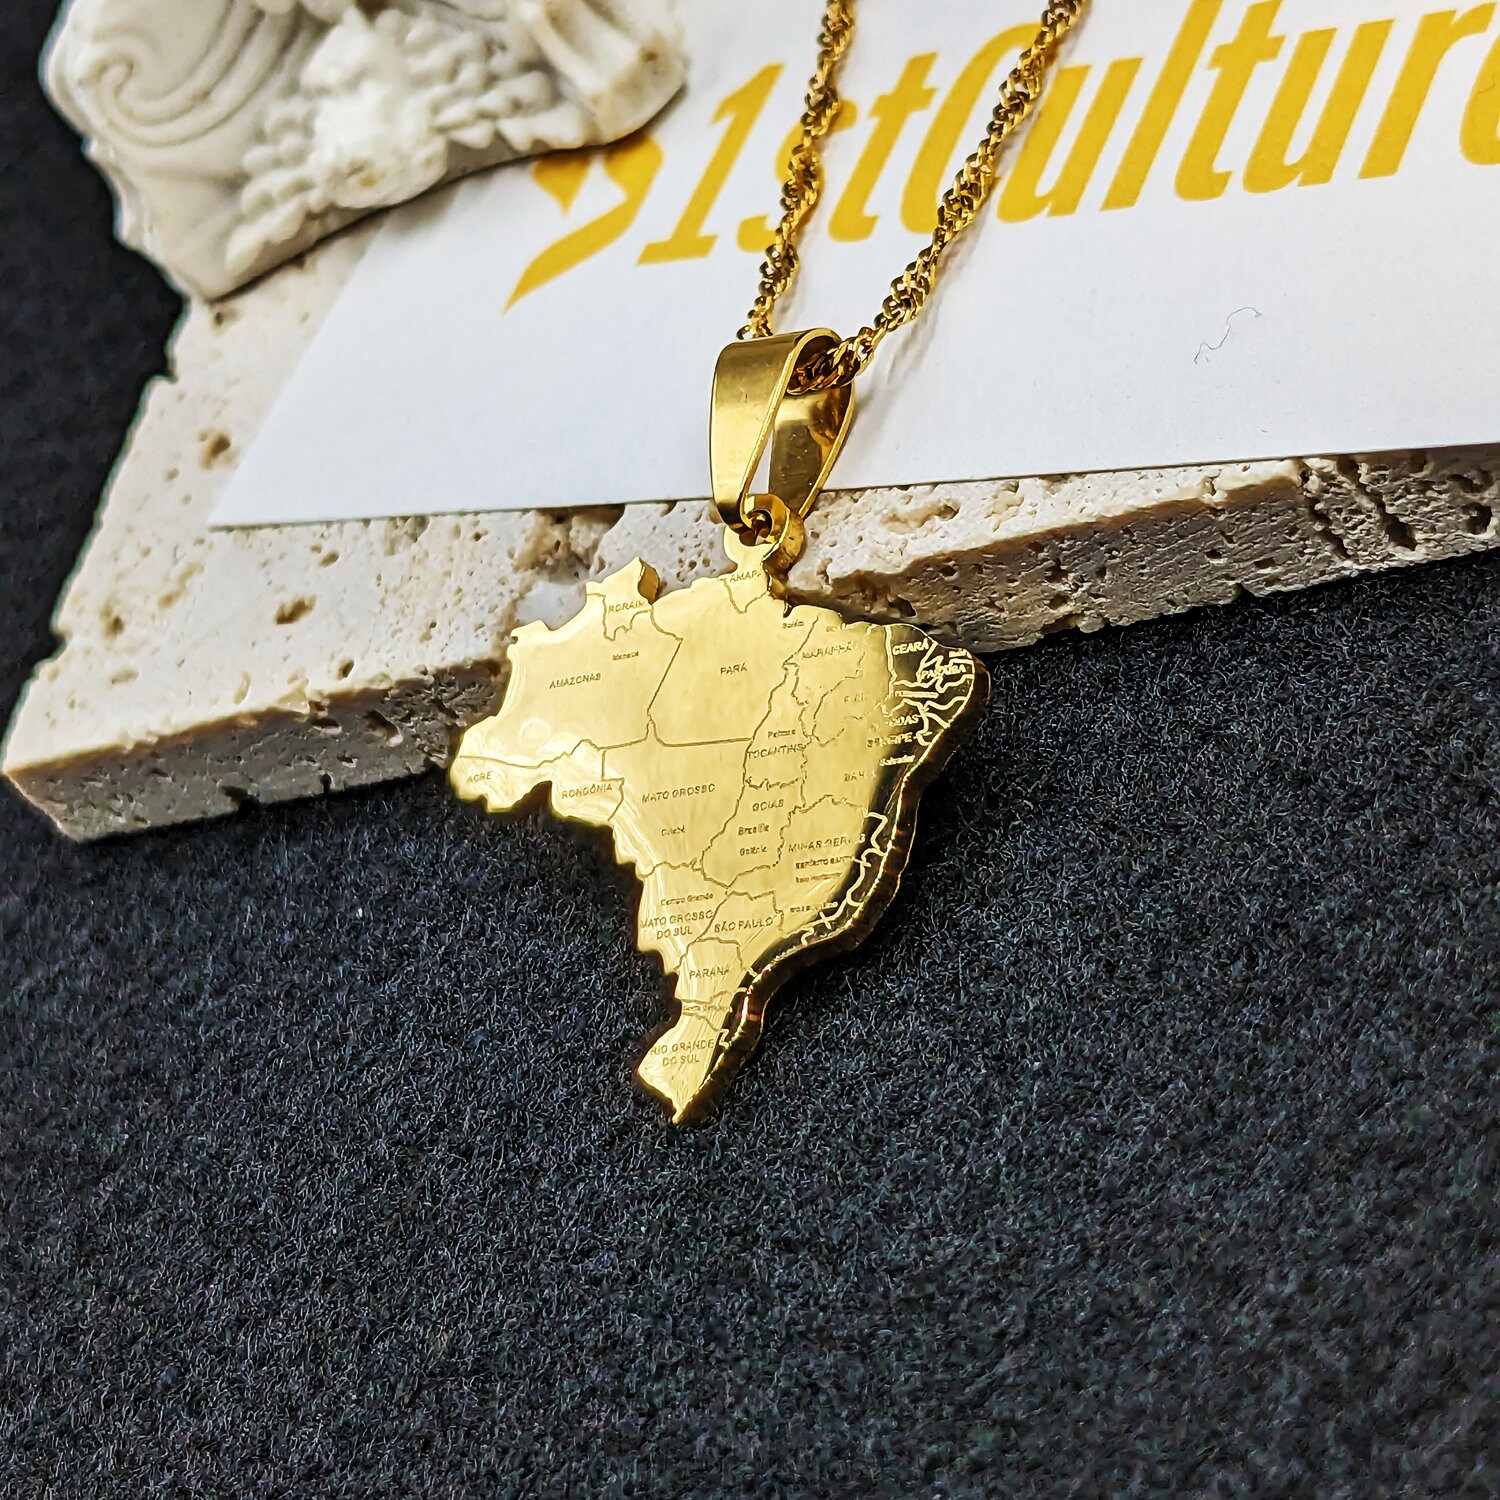 My Journey Brazil-Canada Necklace, 18k Gold Filled